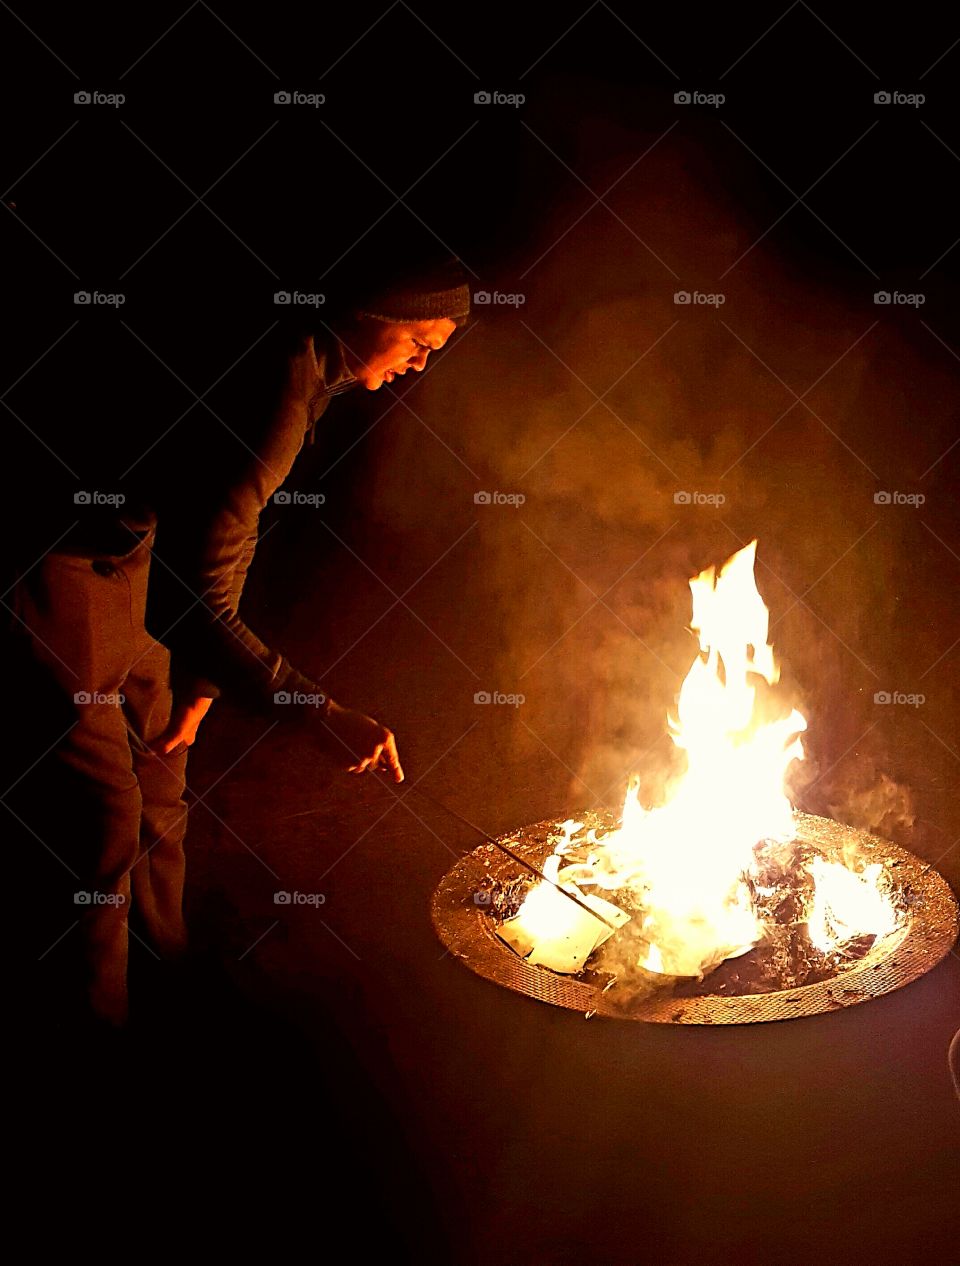 Campfire and smores, toast already